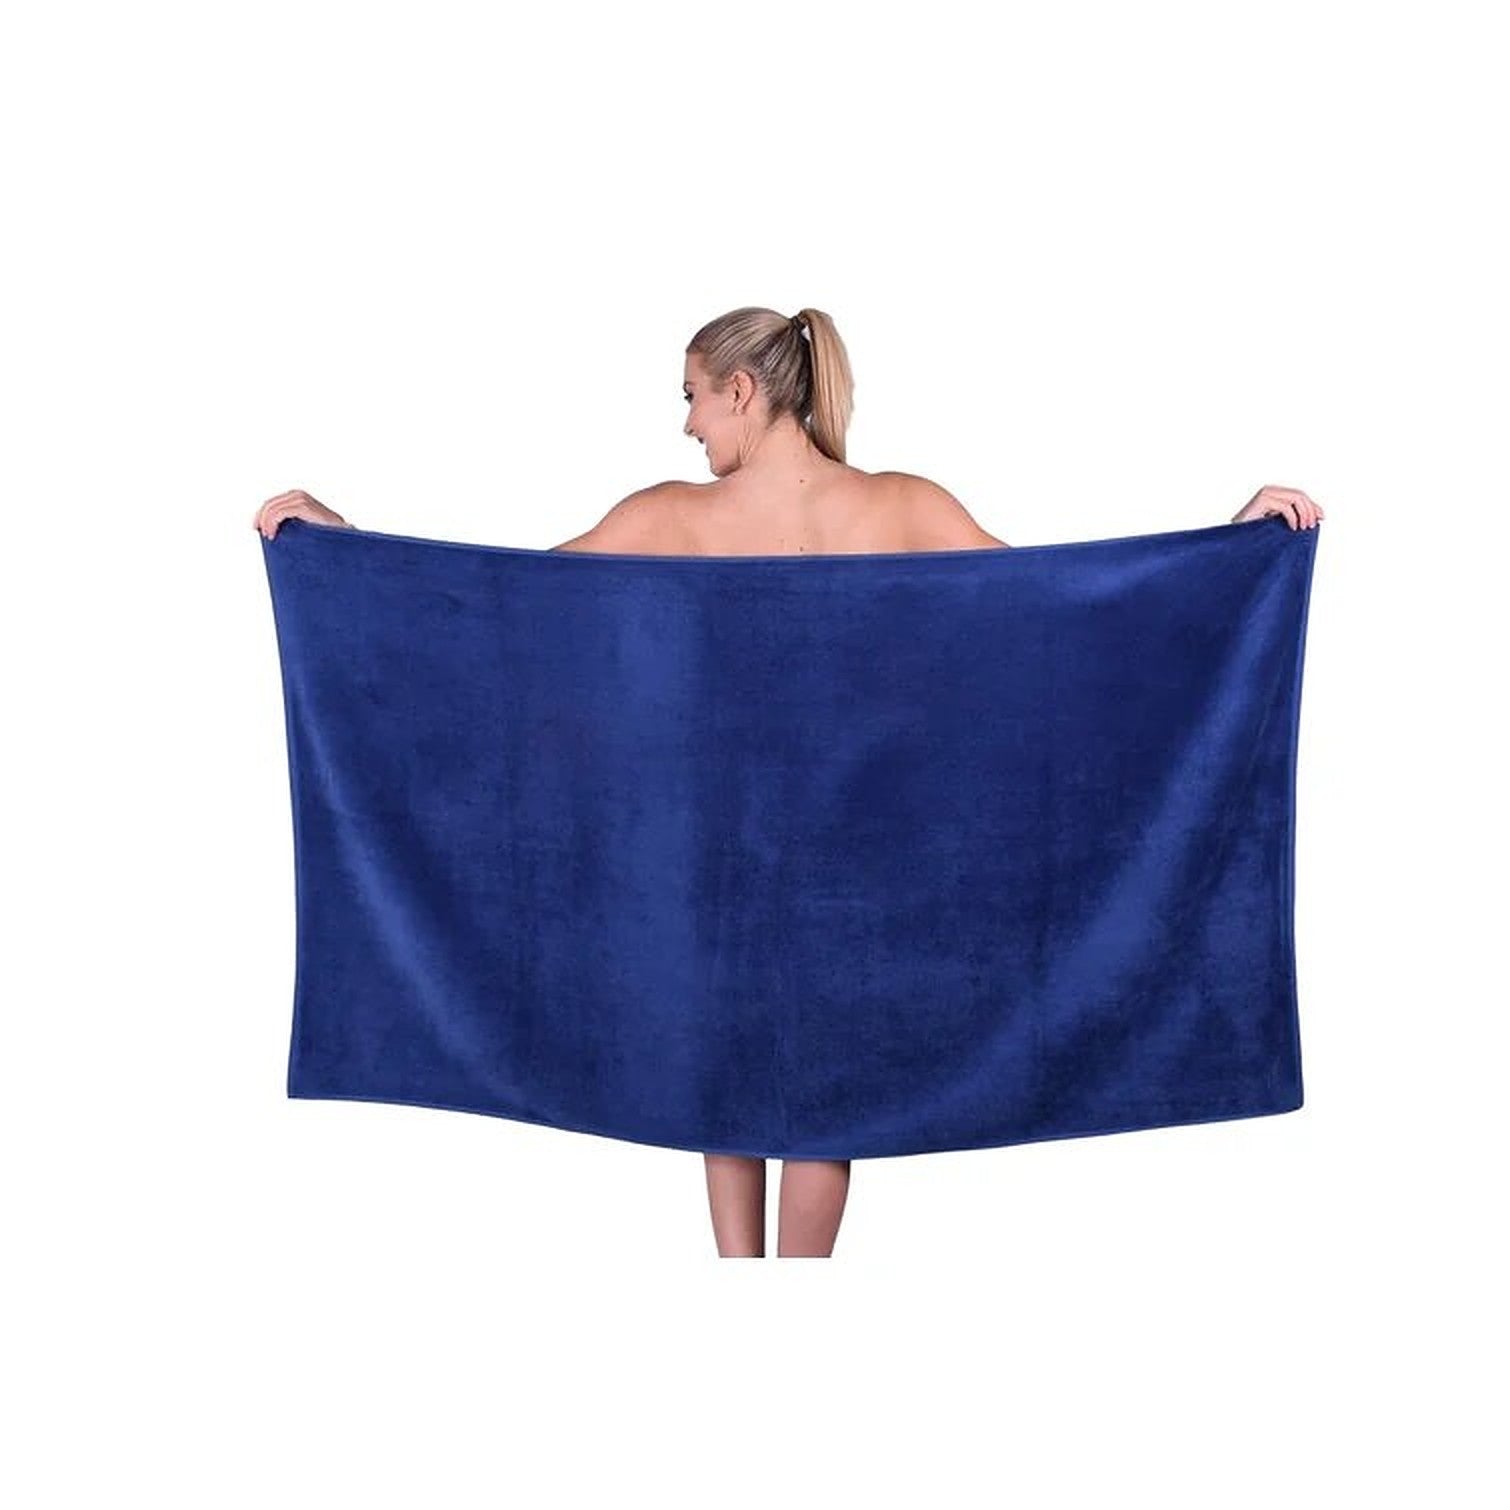 Jumbo Bath Sheet Towels 100% Soft Cotton Bath Sheets (85cm x165 cm)